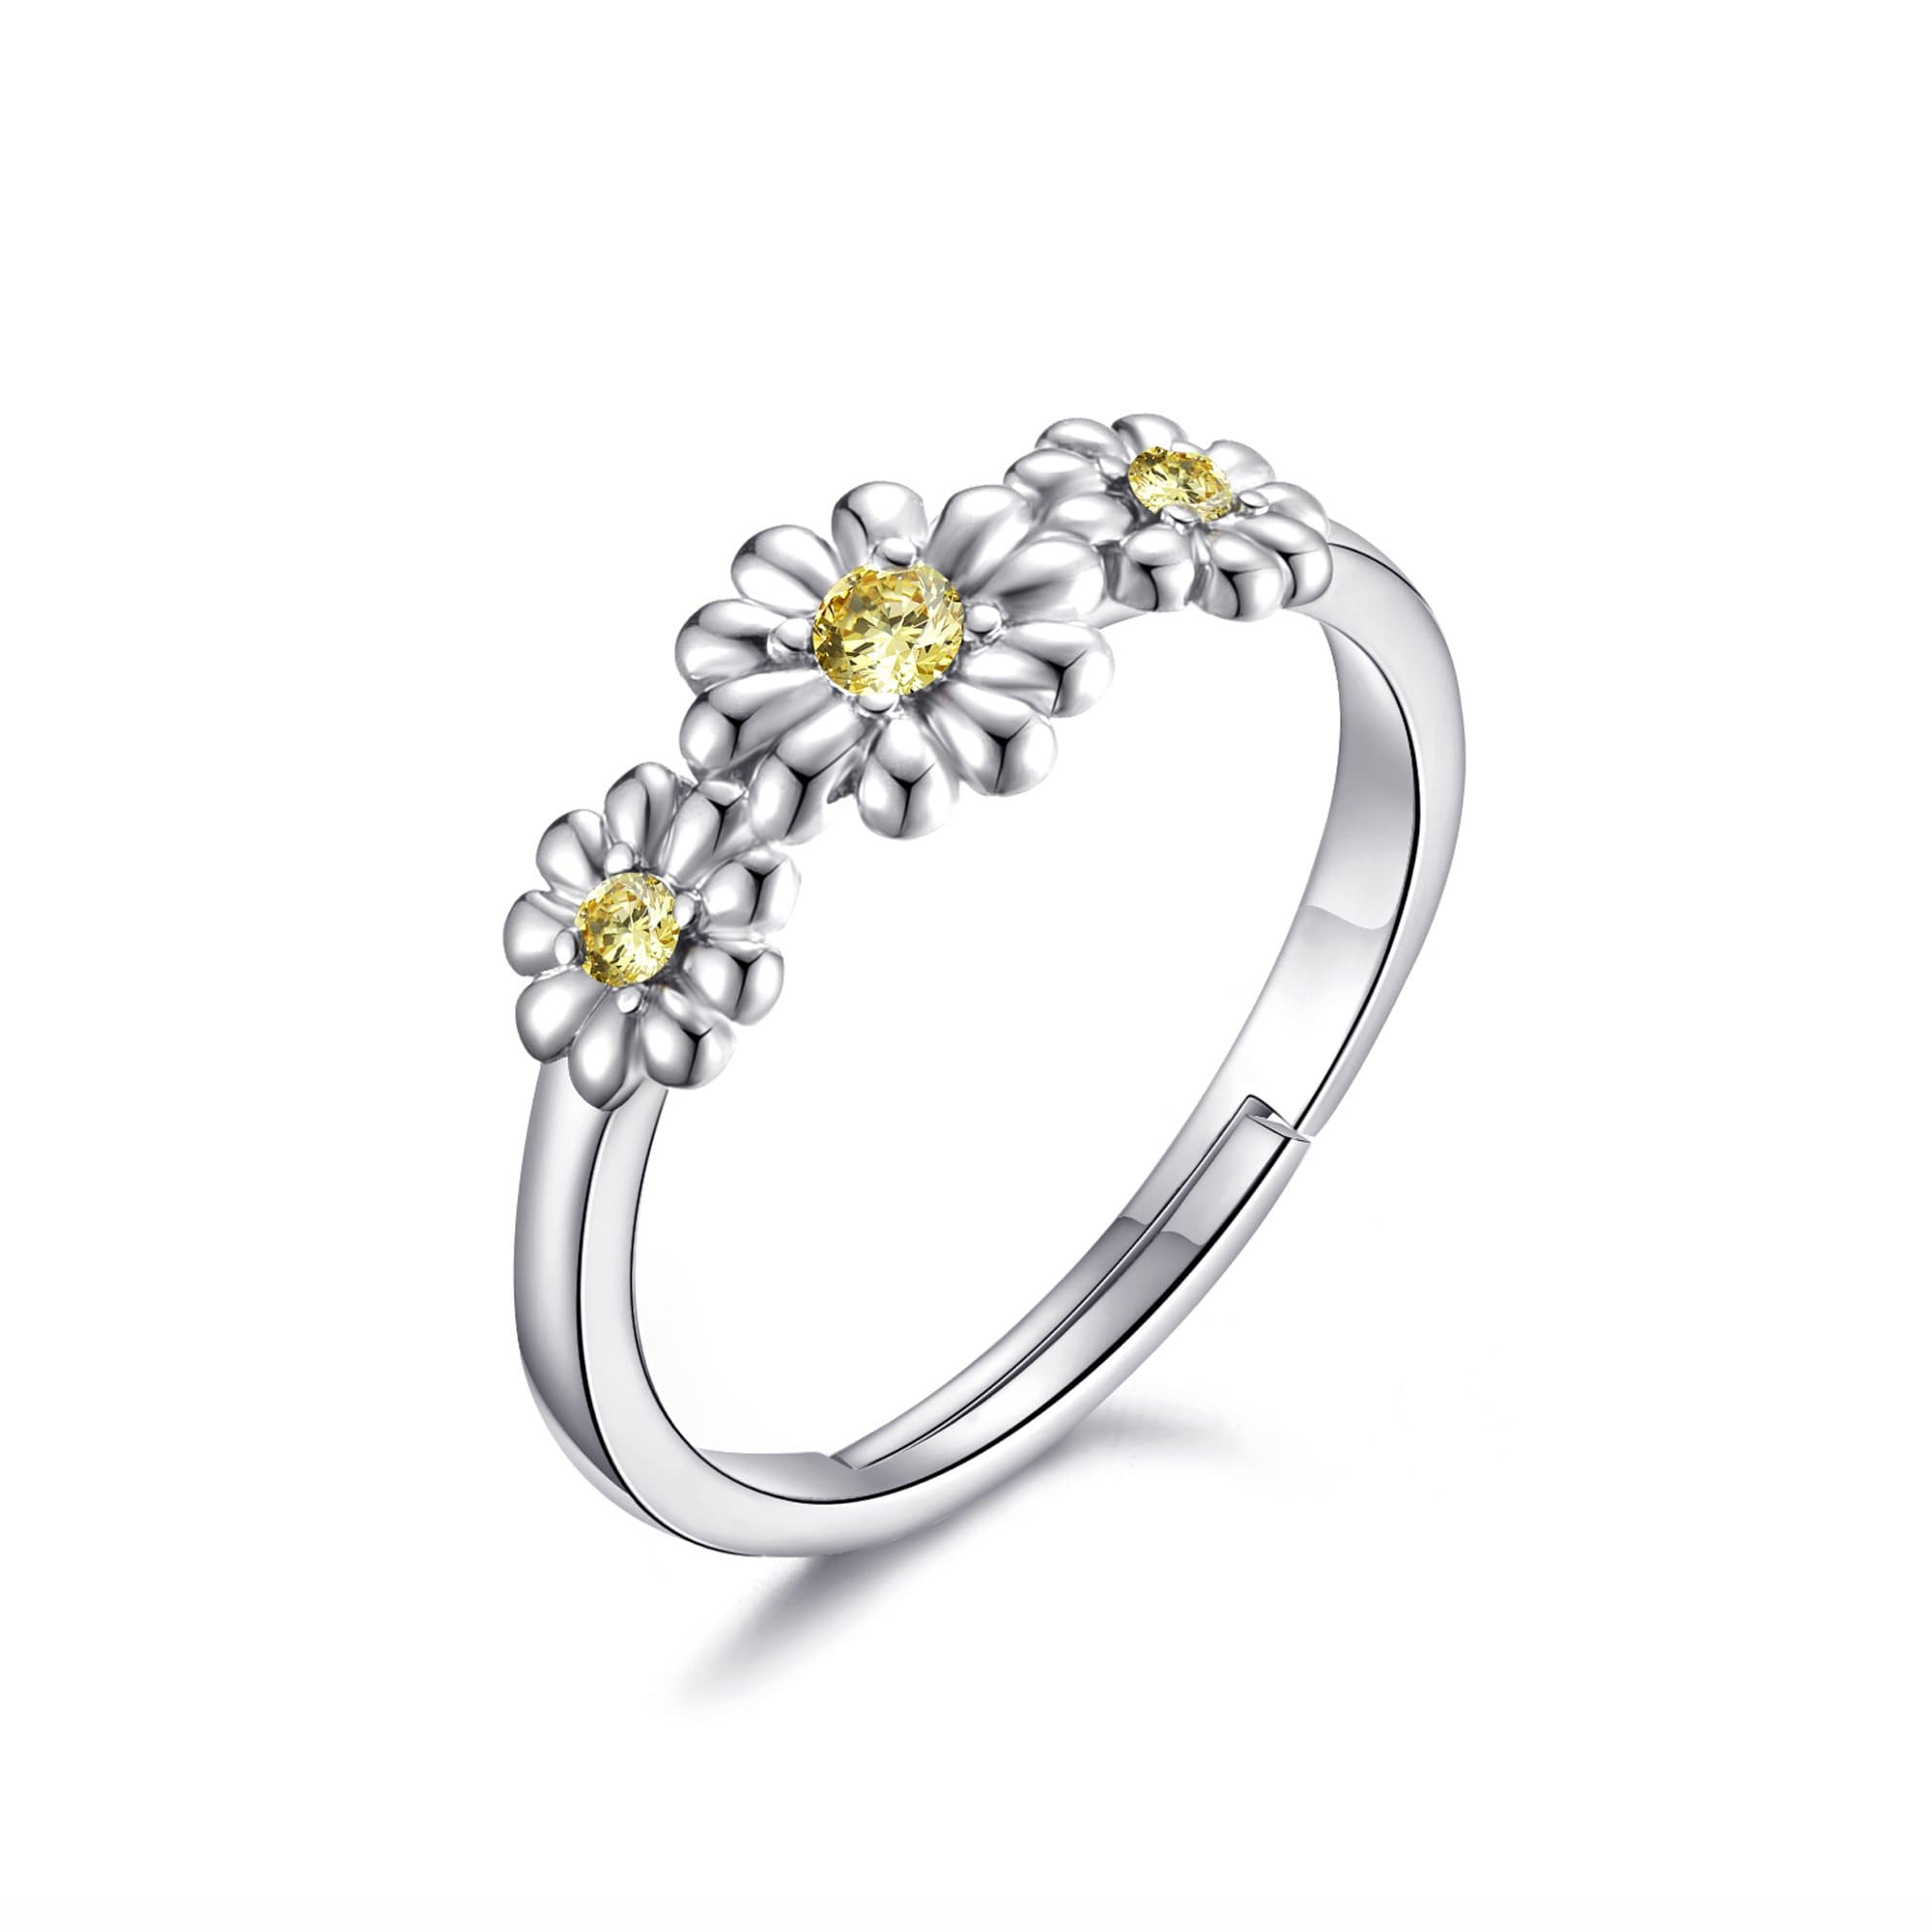 Adjustable Triple Crystal Daisy Ring Created with Zircondia® Crystals by Philip Jones Jewellery